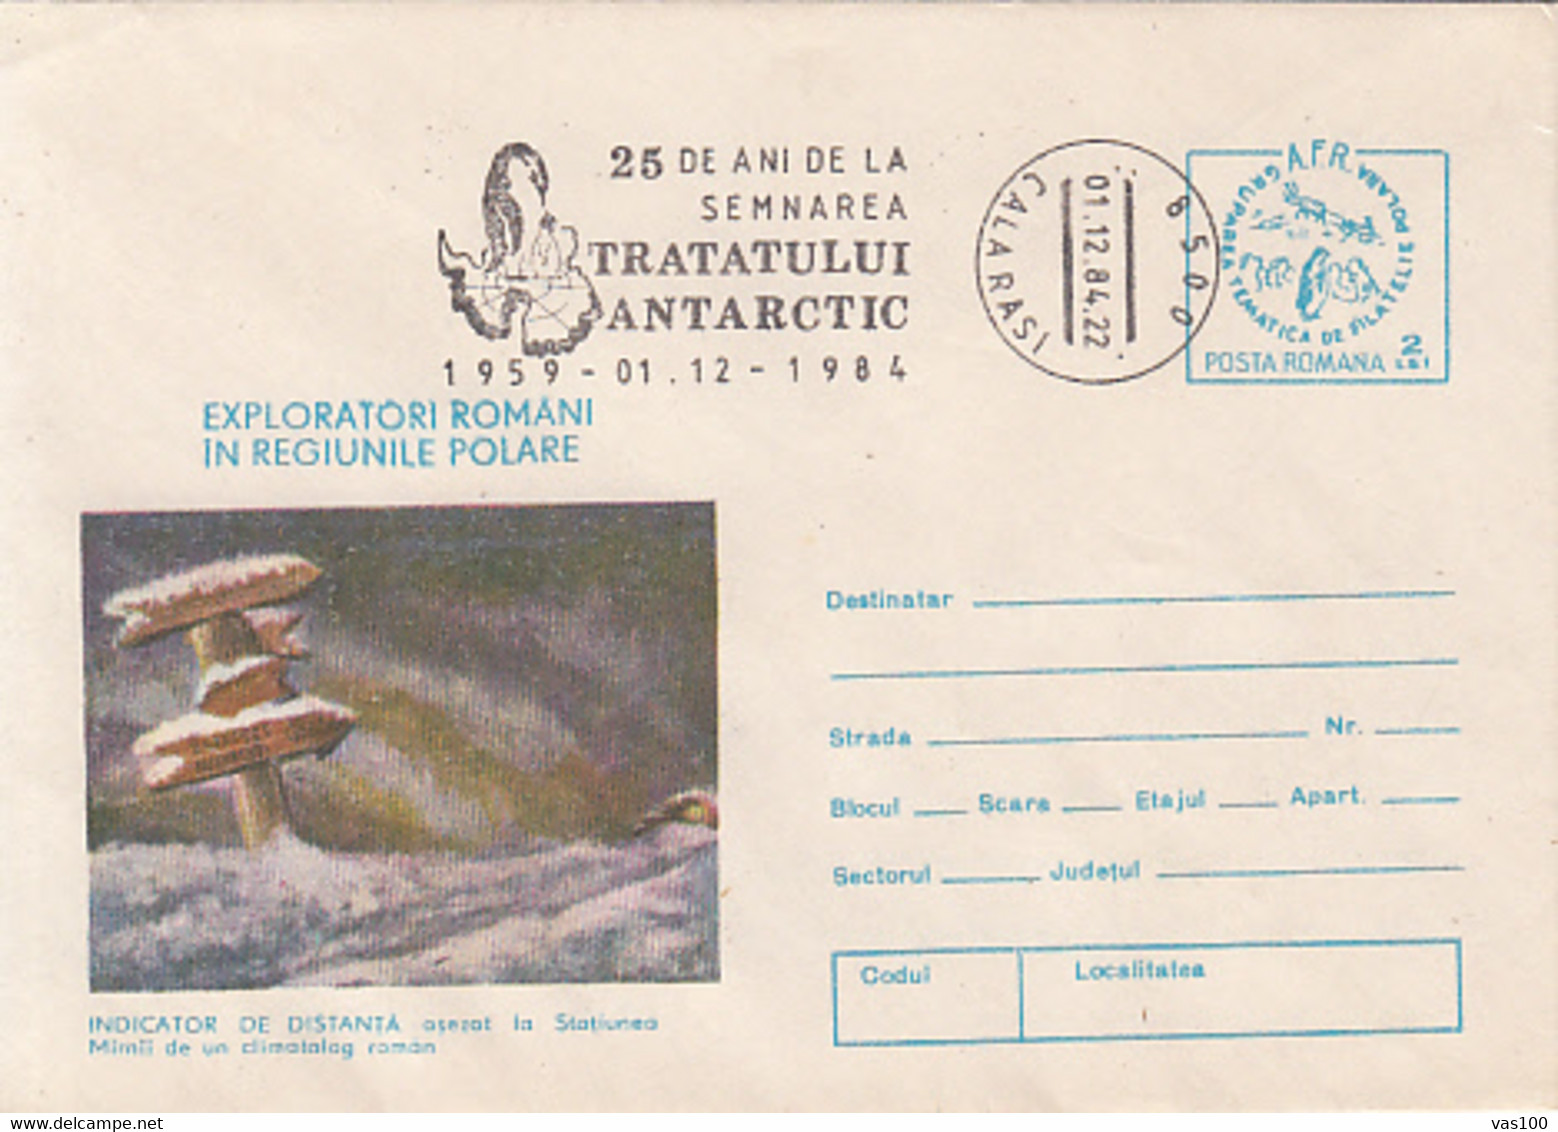 SOUTH POLE, ANTARCTIC TREATY SPECIAL POSTMARK, ANTARCTIC LANDSCAPE, COVER STATIONERY, ENTIER POSTAL, 1984, ROMANIA - Antarctisch Verdrag